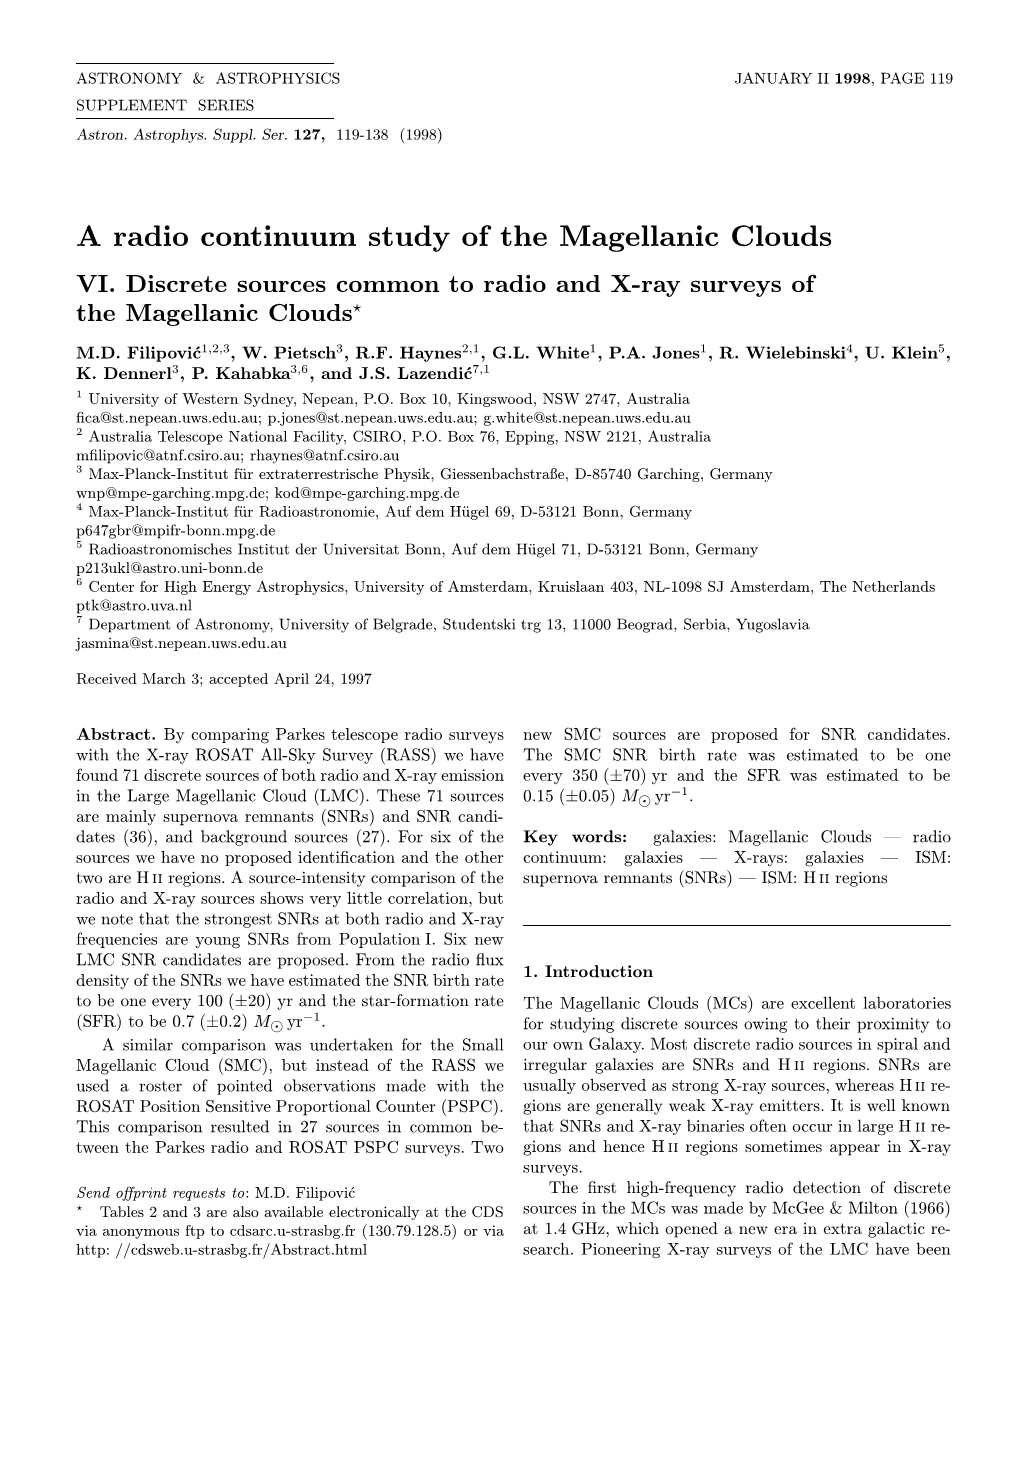 A Radio Continuum Study of the Magellanic Clouds VI